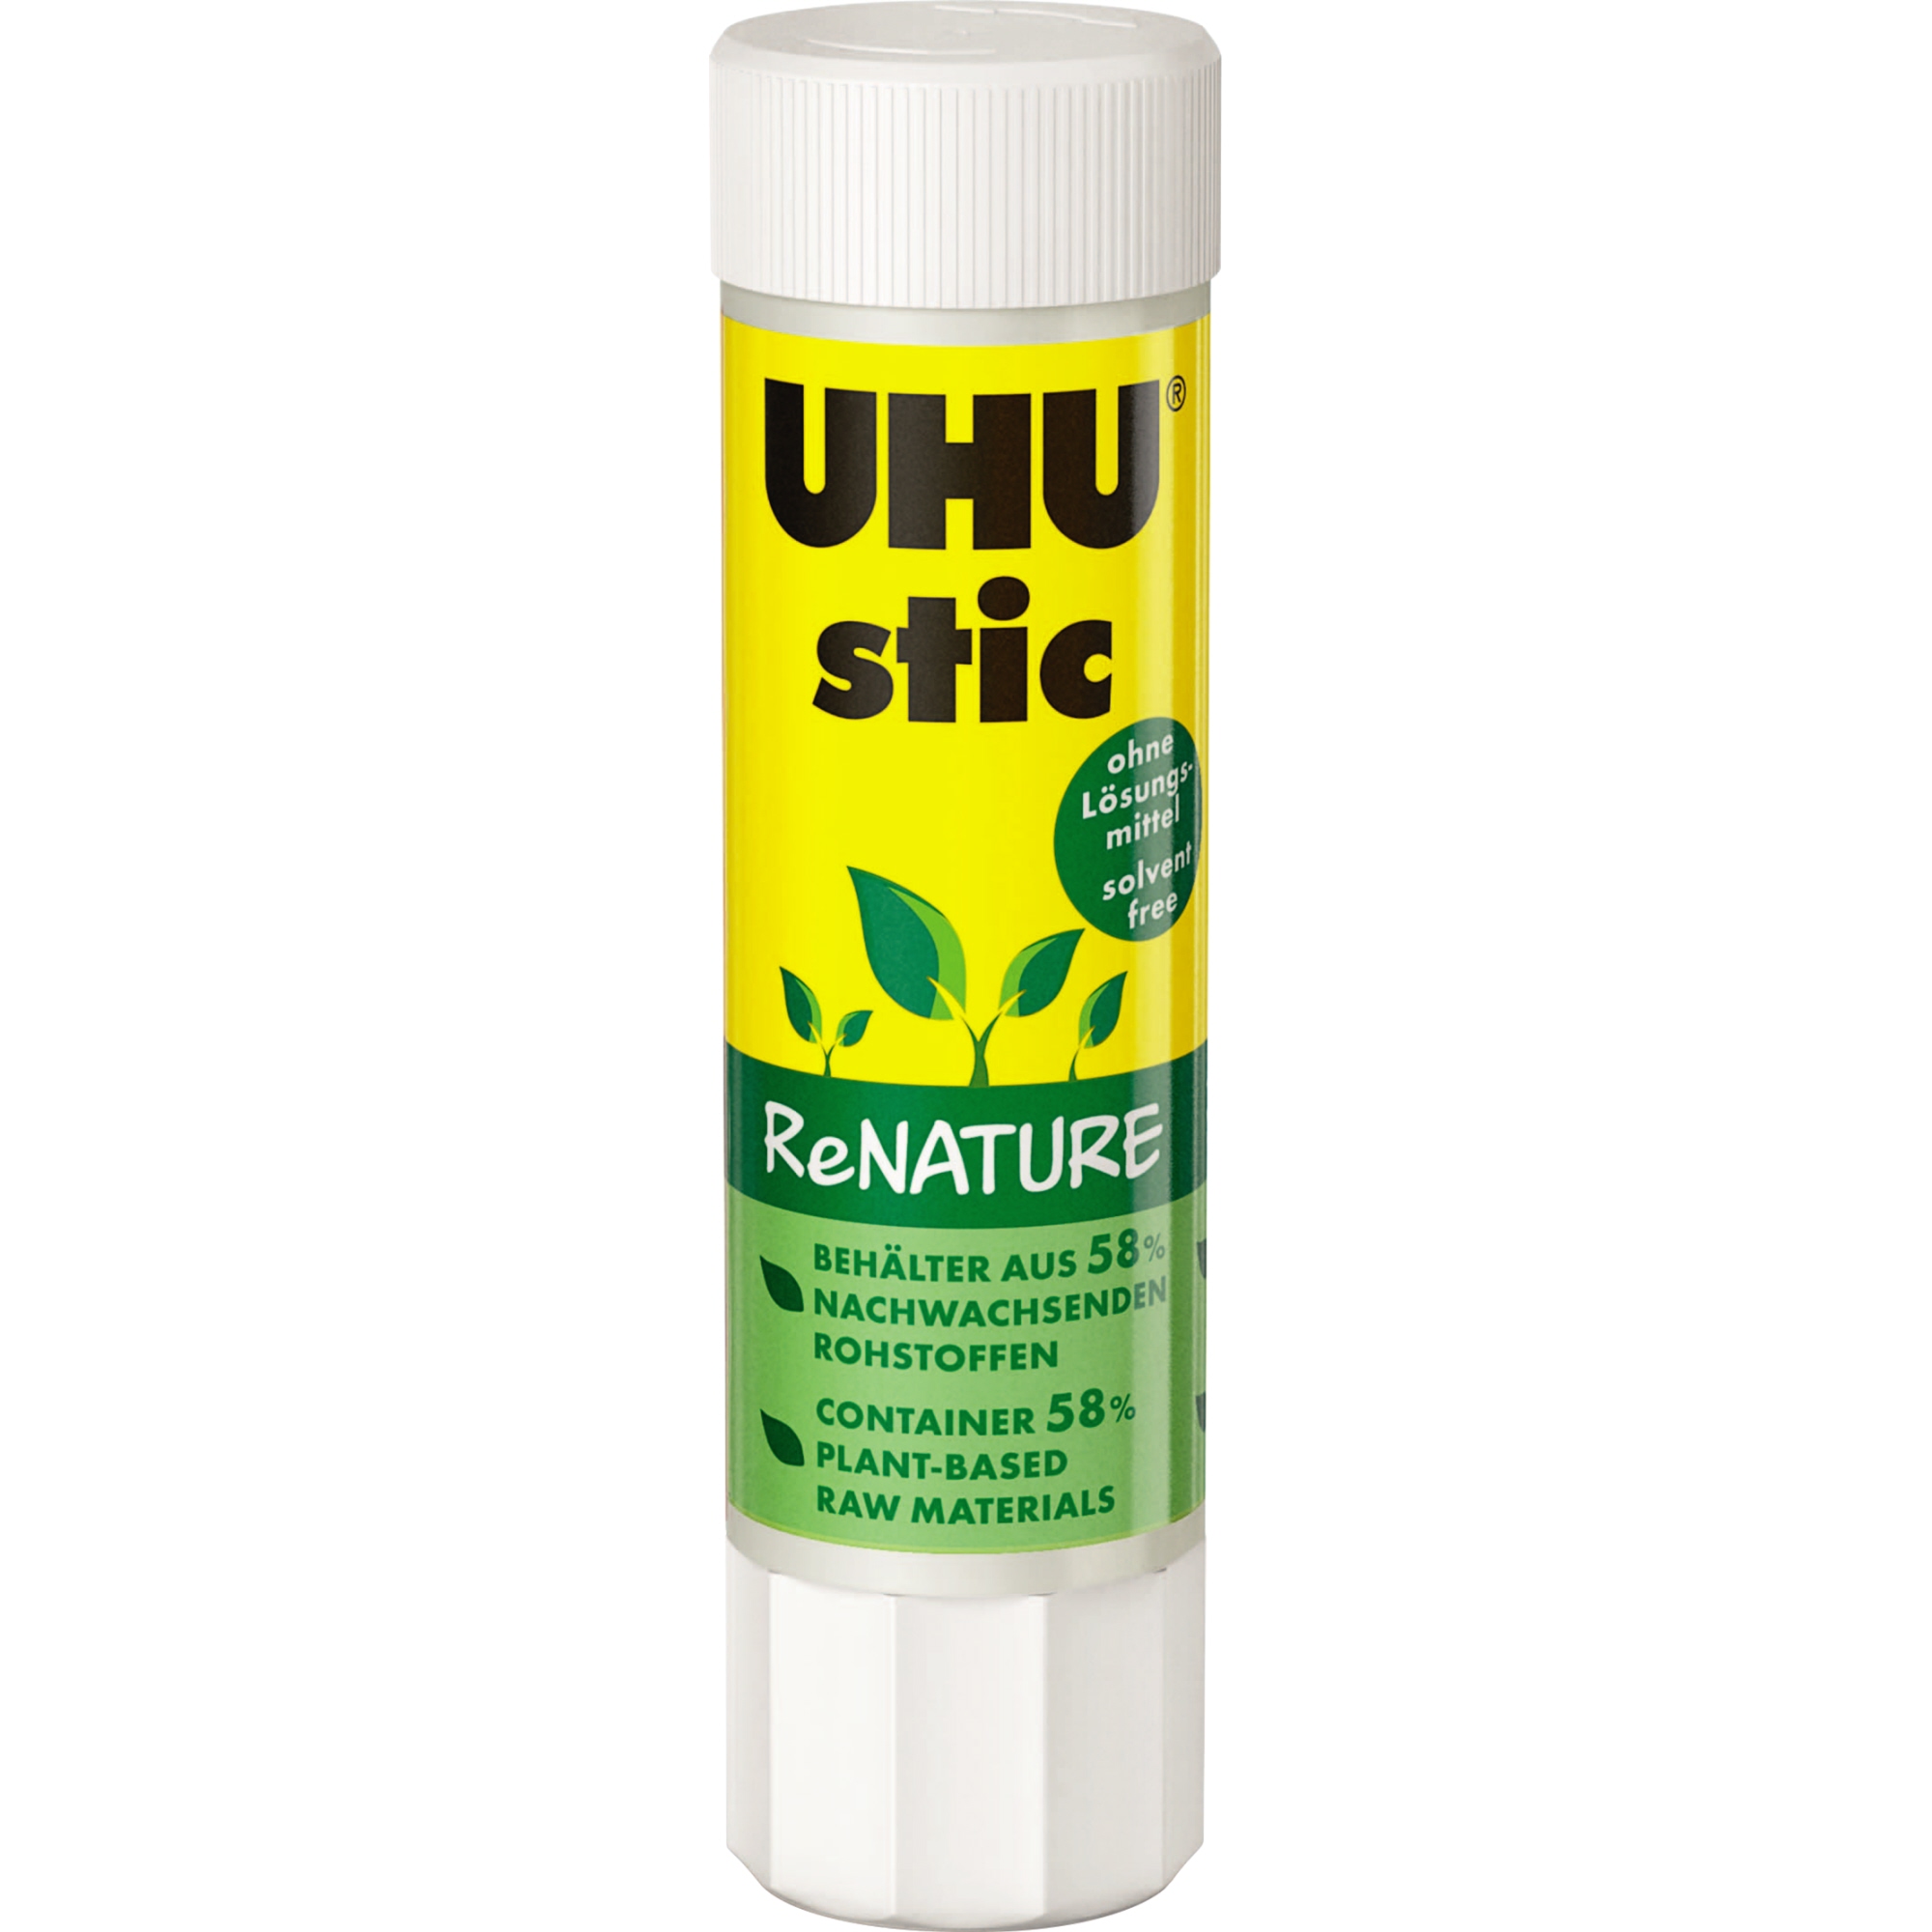 UHU® Klebestift stic ReNATURE 8,2 g